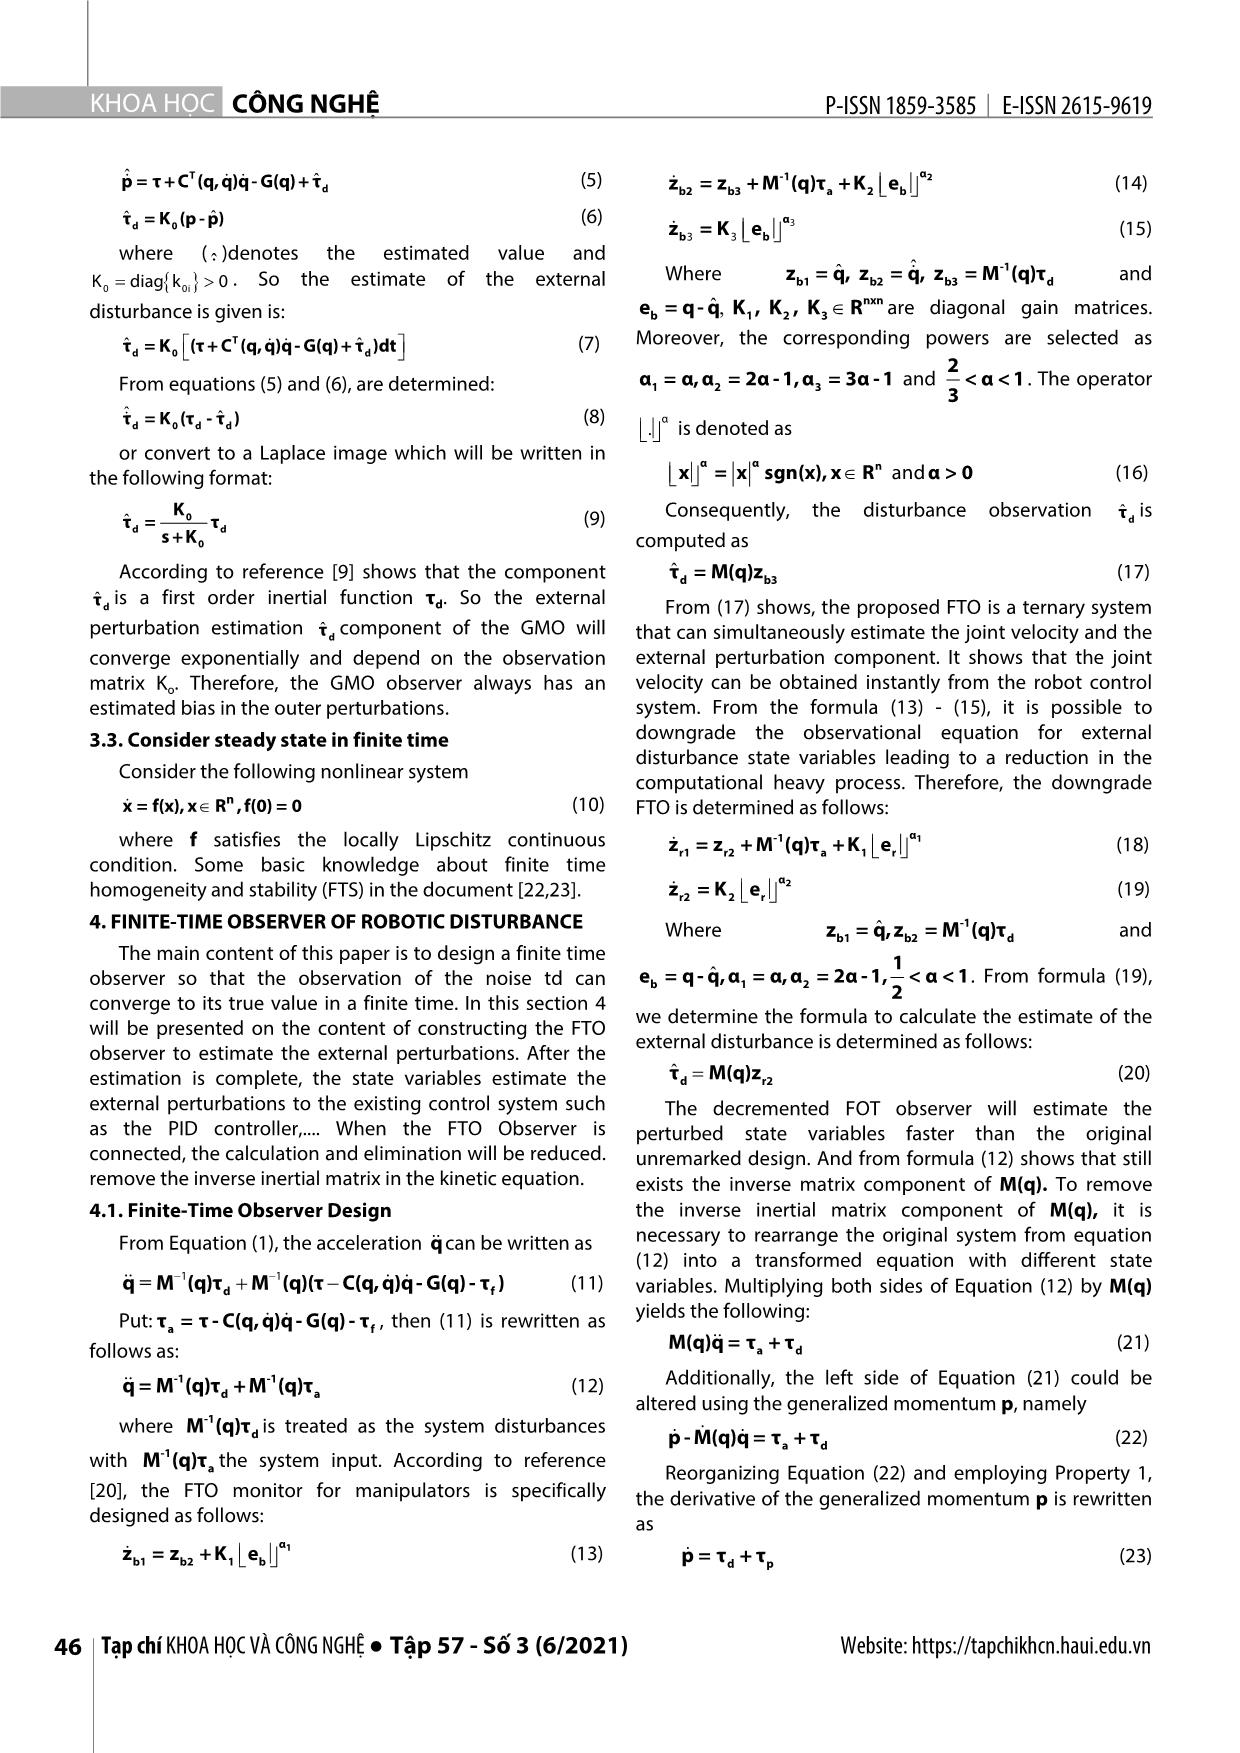 Using the finite - time disturbance observer (FTO) for robotic manipulator Almega 16 trang 3